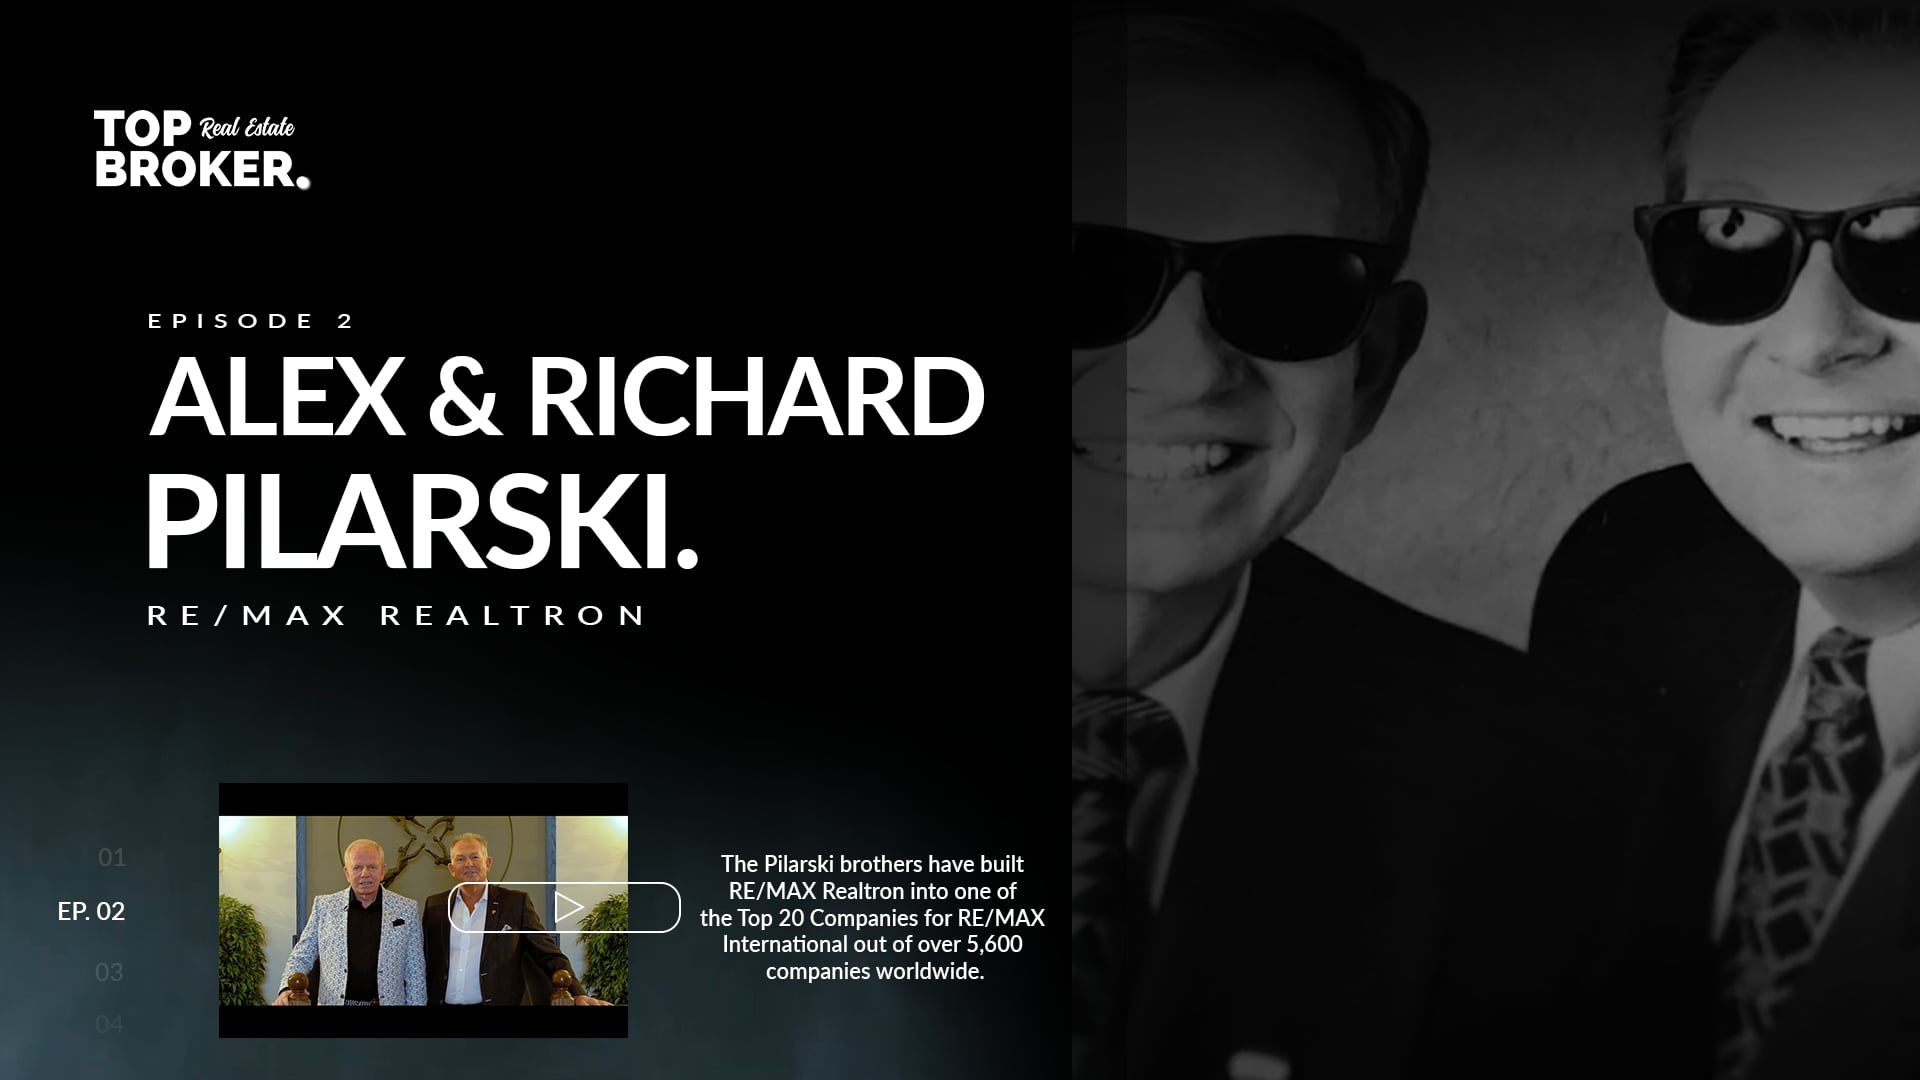 Top Broker - Episode 2 - Alex & Richard Pilarski